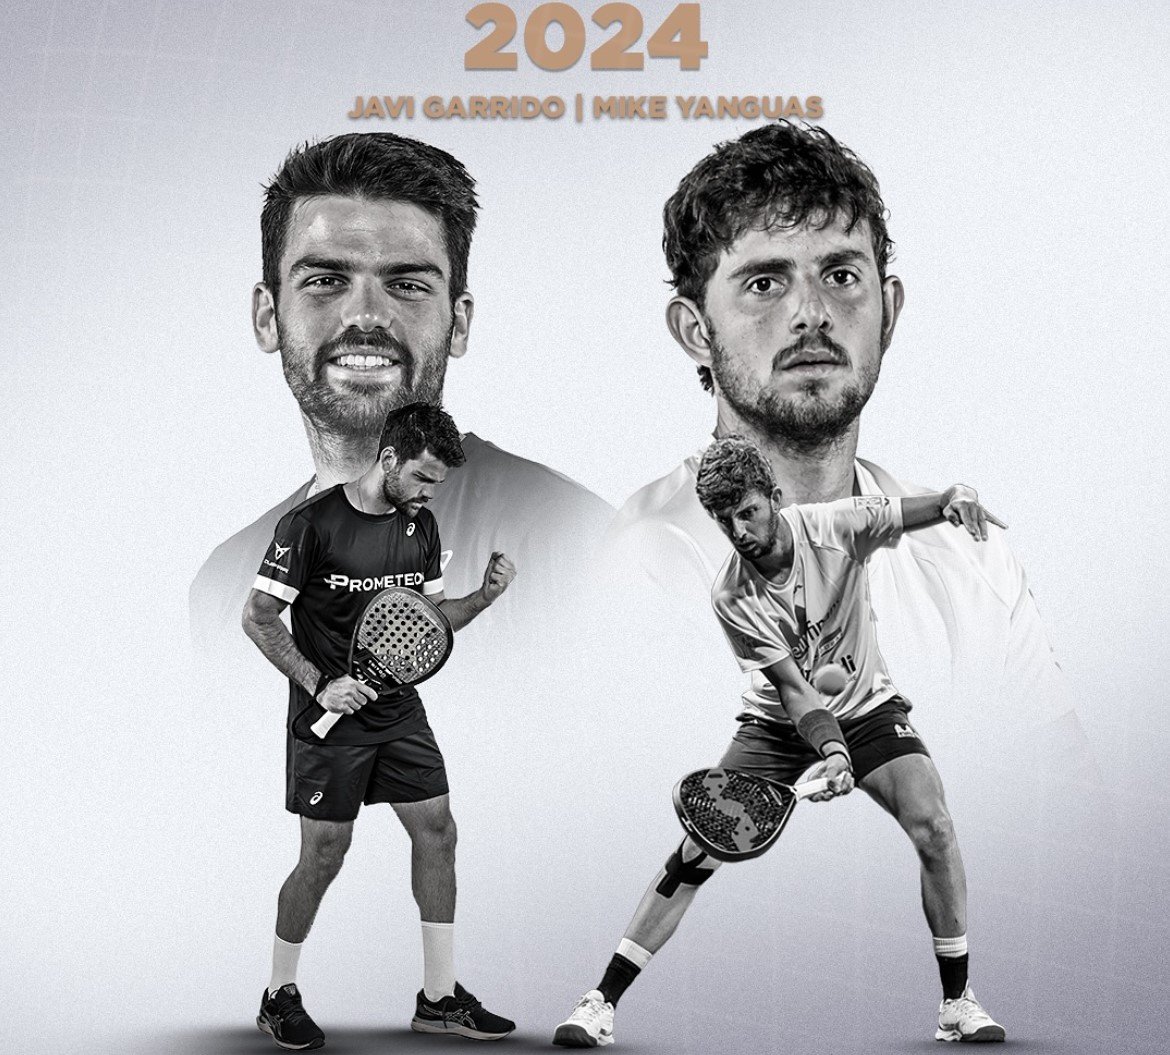 Javi Garrido y Mike Yanguas Nueva Pareja en 2024